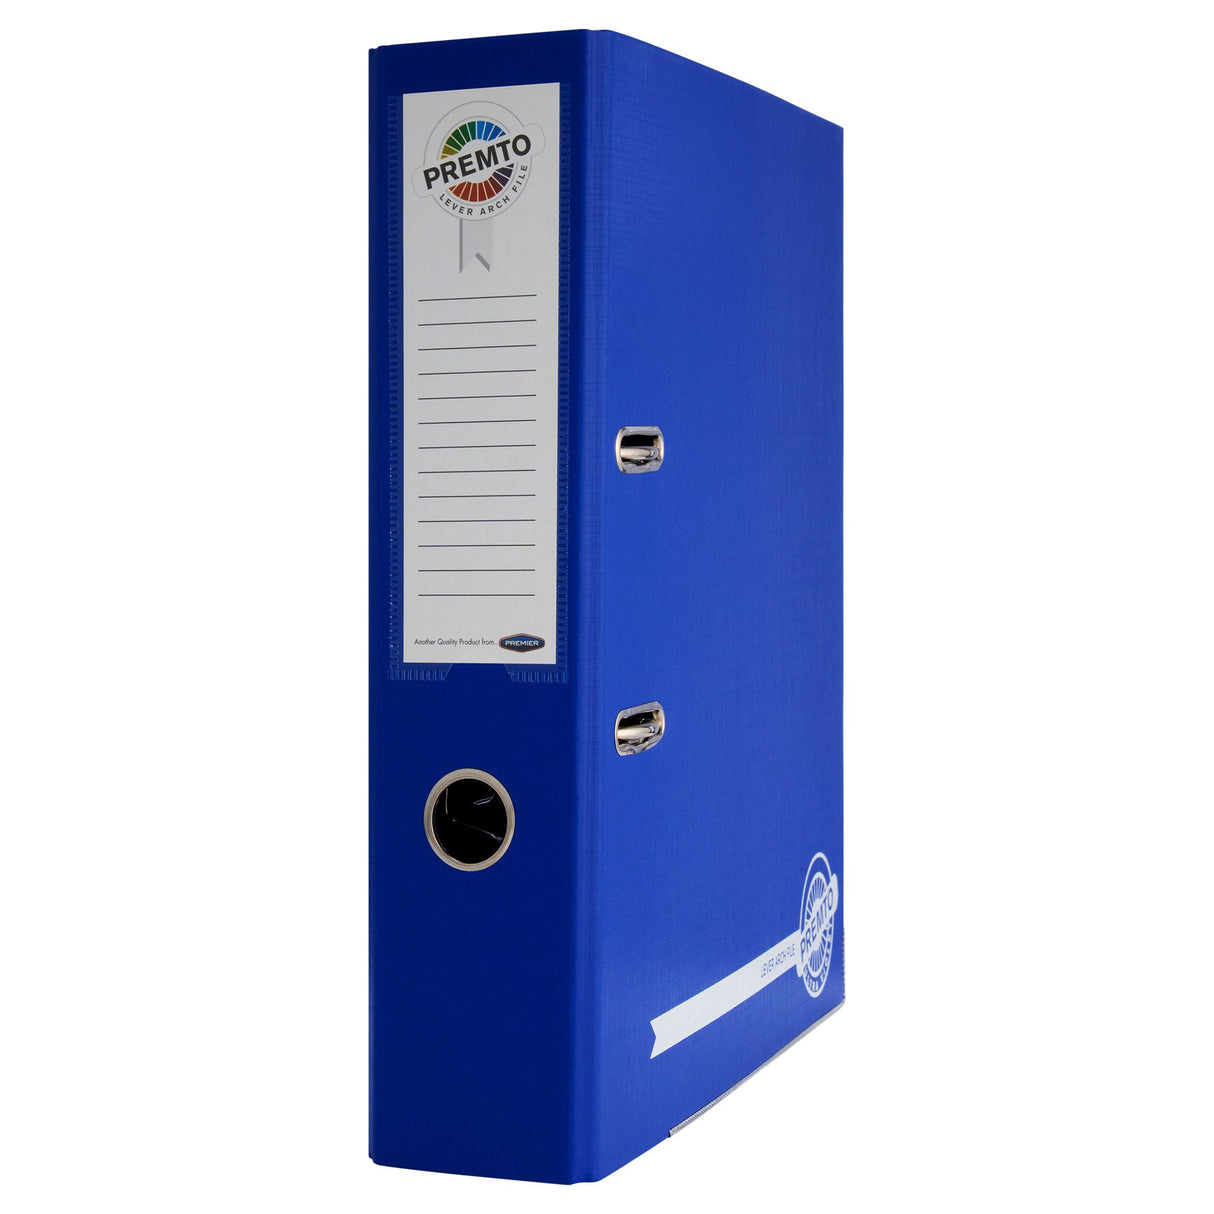 Premto A4 Lever Arch File S-2 - Printer Blue | Stationery Shop UK